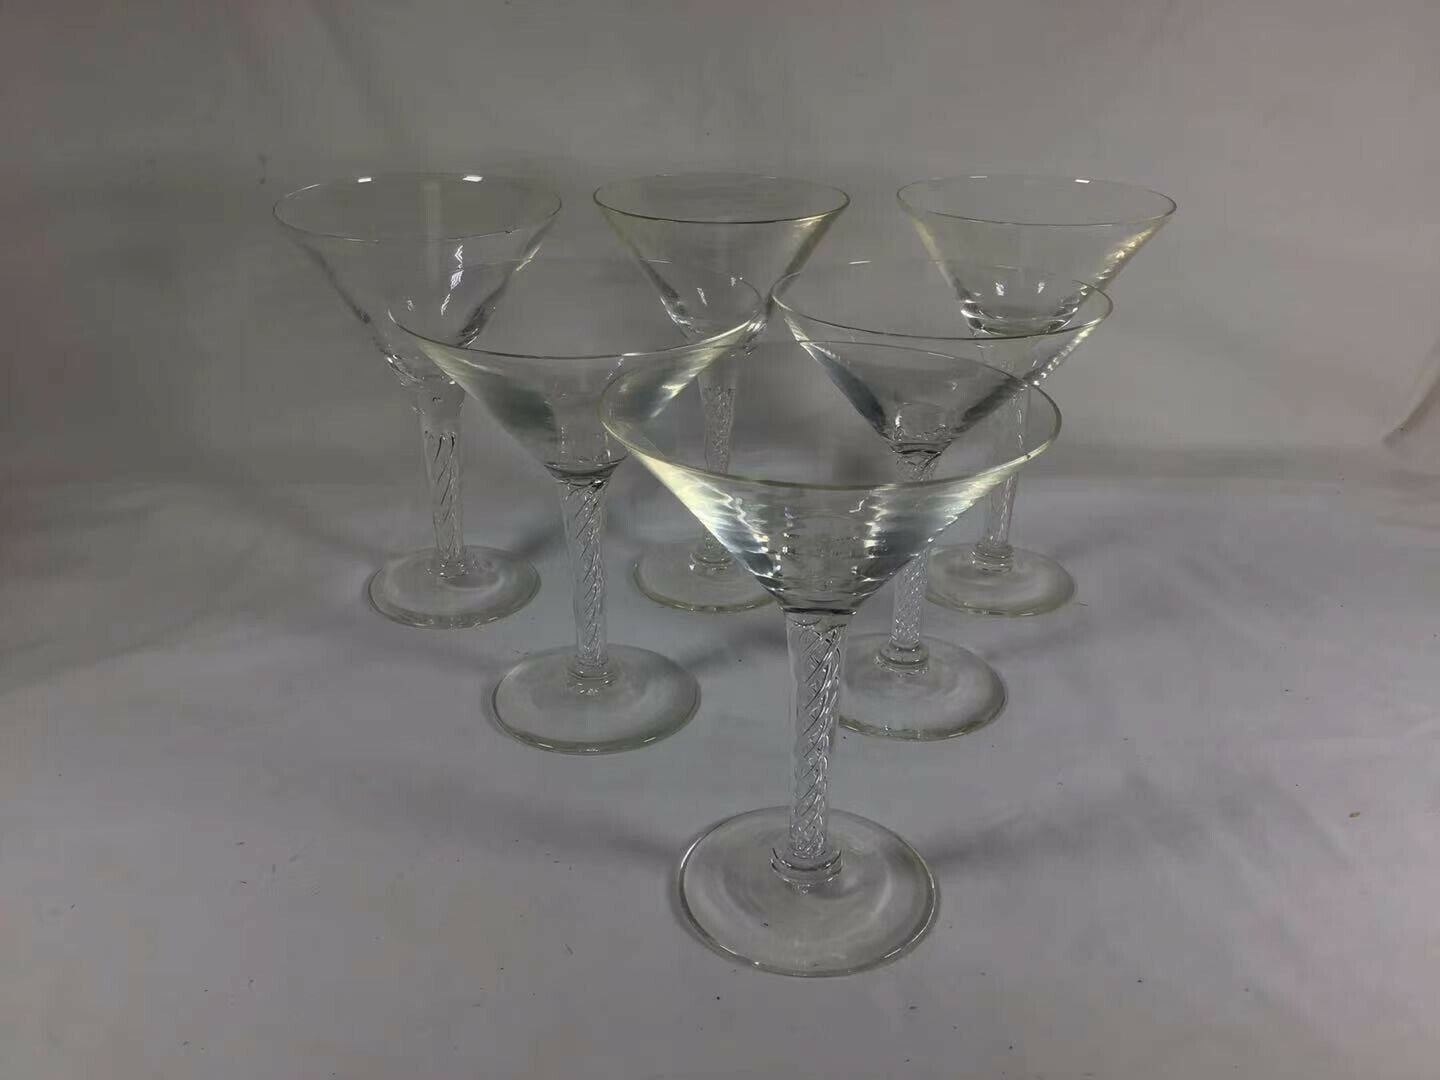 Set Of 6 Antique Circa 20th Antique Crystal Cut Flower Art Wine Glass Glassware